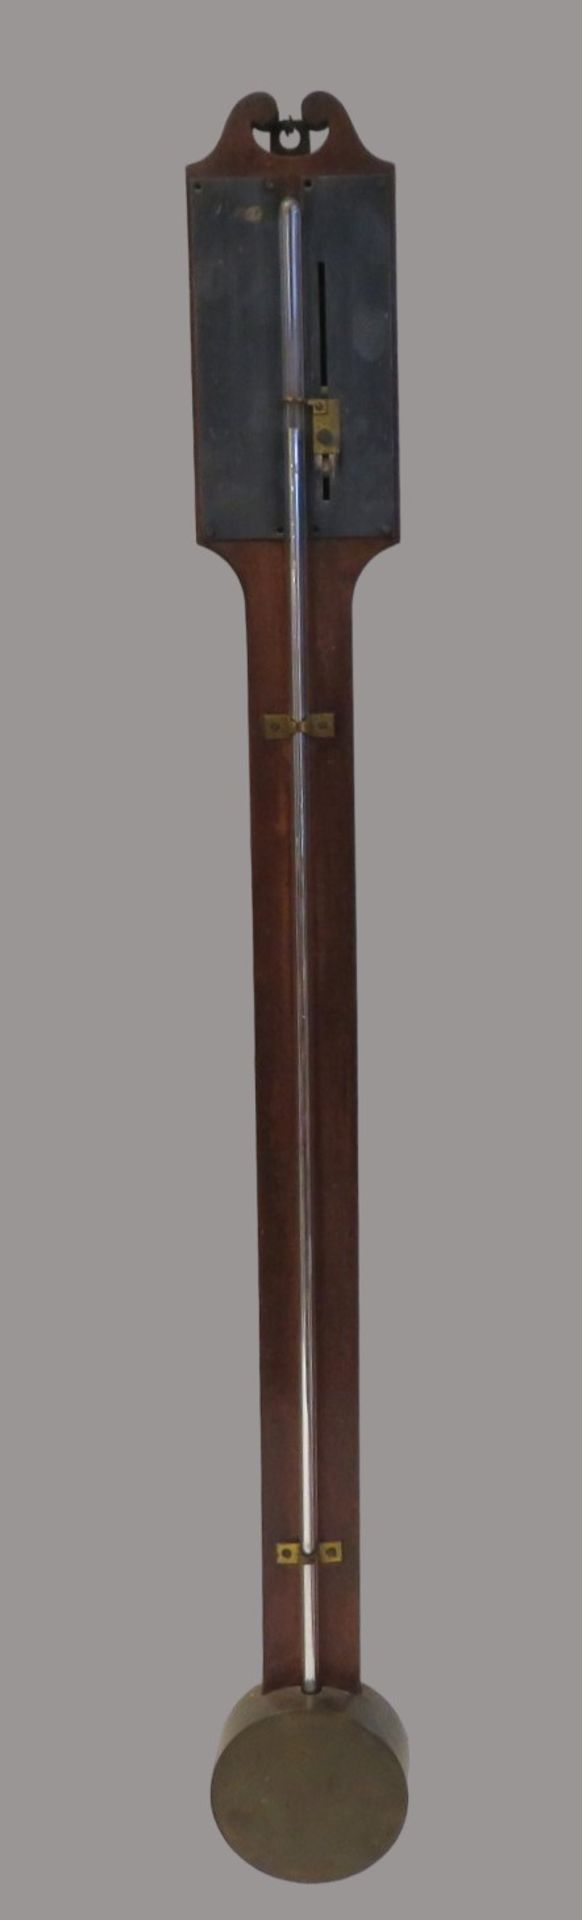 Quecksilber-Thermometer, G. Oehme Hannover, 19. Jahrhundert, gem., intakt, 92 x 11,5 x 4 cm.